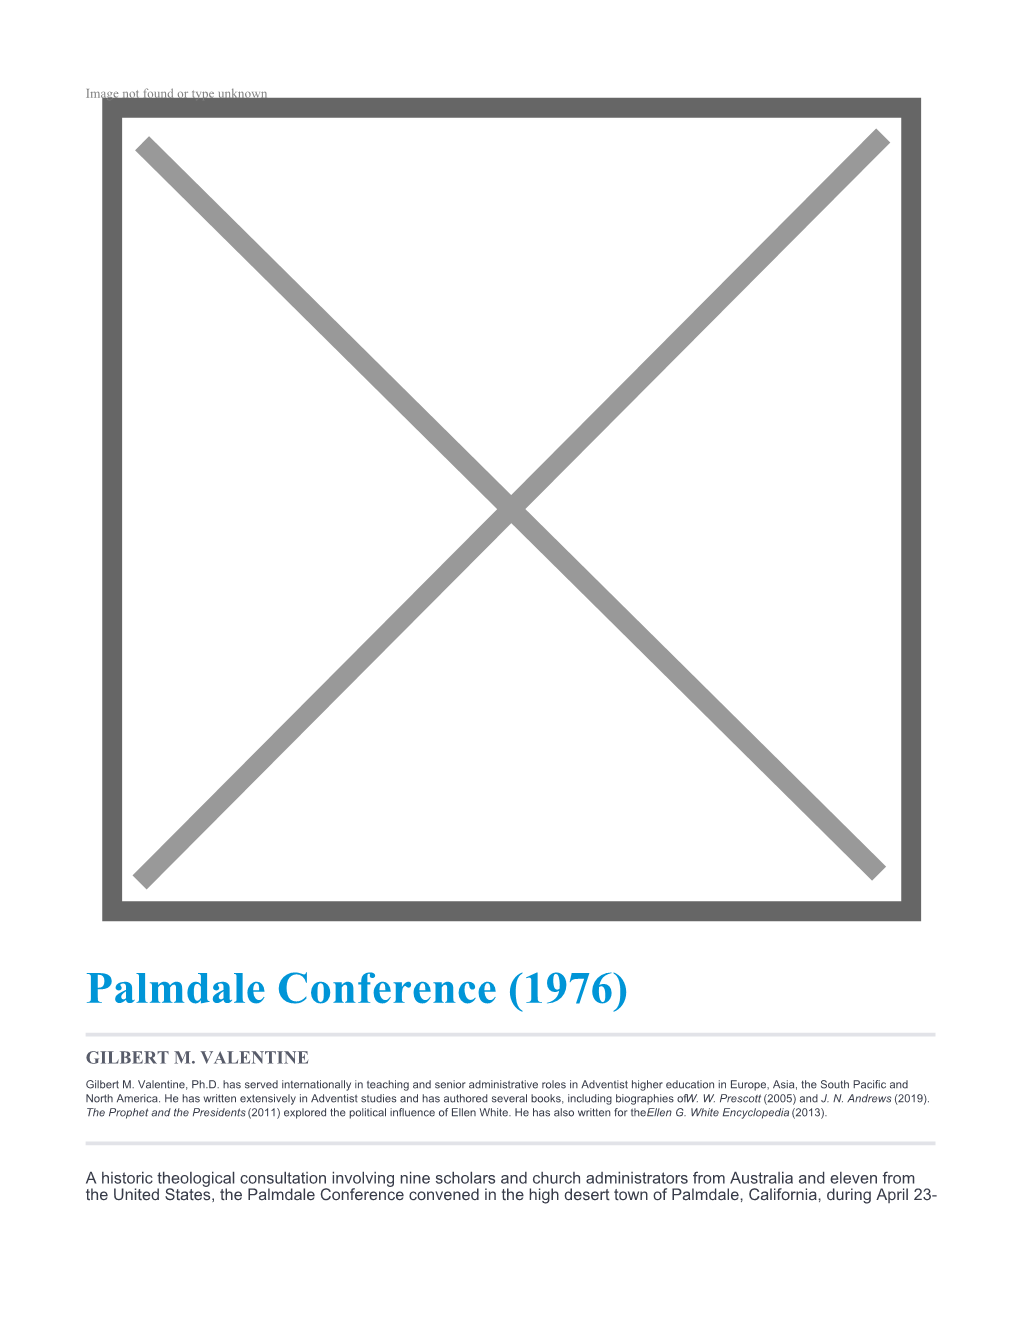 Palmdale Conference (1976)